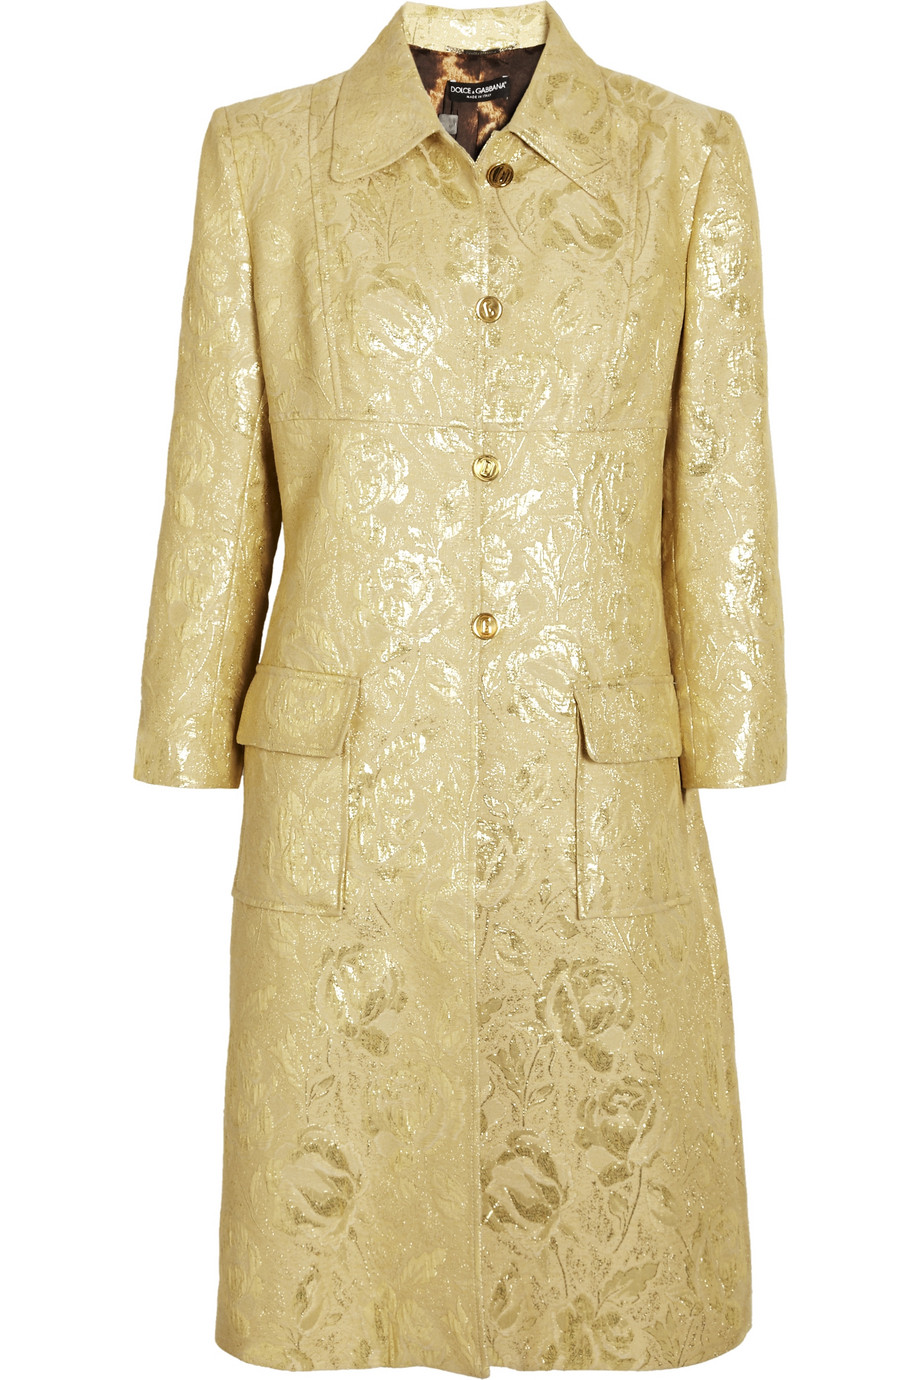 Dolce & Gabbana Metallic Brocade Coat in Gold | Lyst